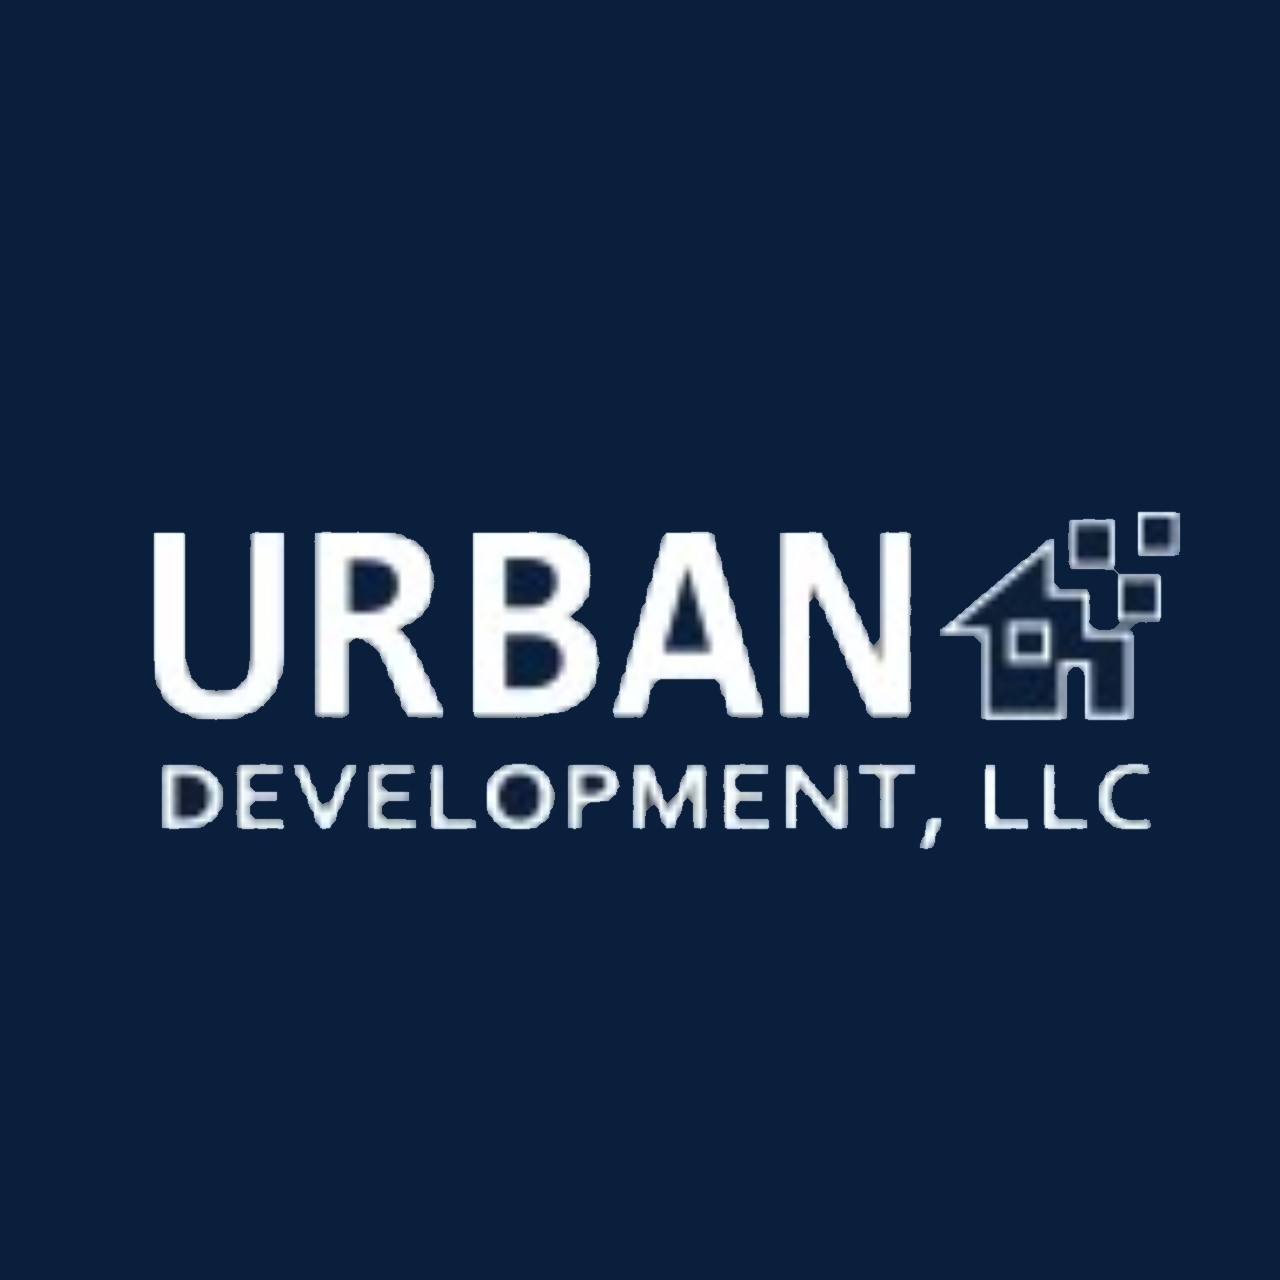 Urban Developments